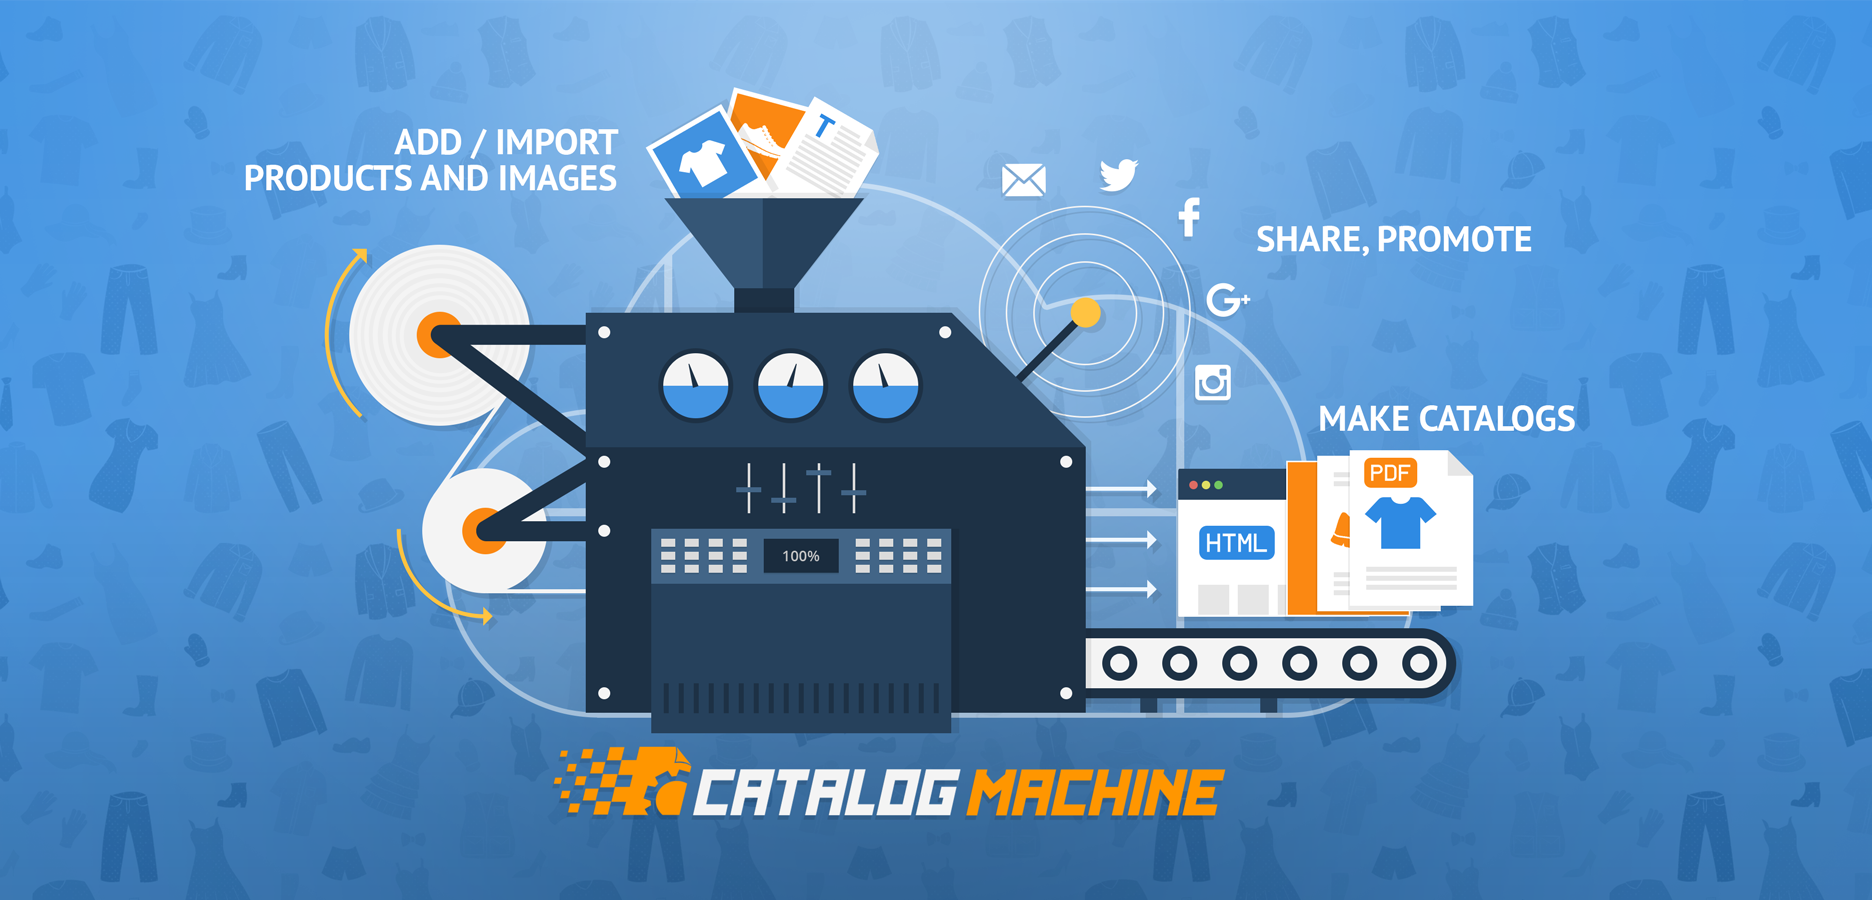 Make Online Product Catalogs Catalog Machine